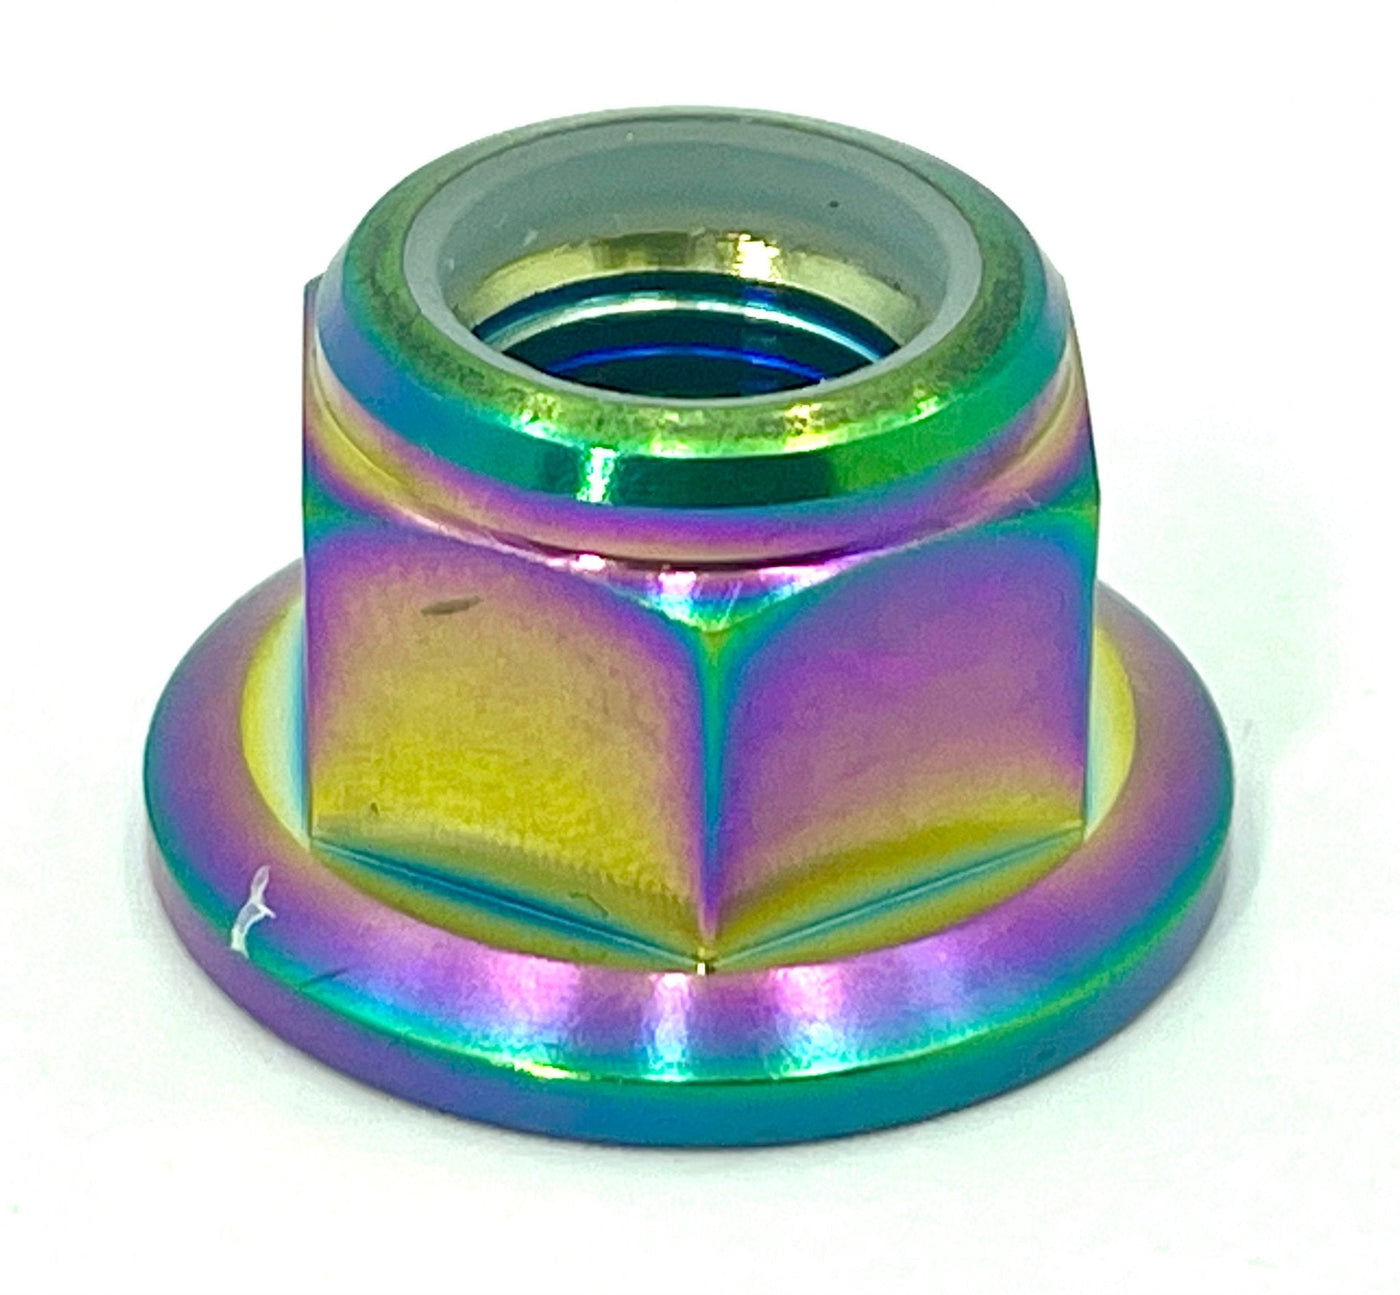 Anodized Titanium Nylock Nut for Surron Motor- M12x1.25